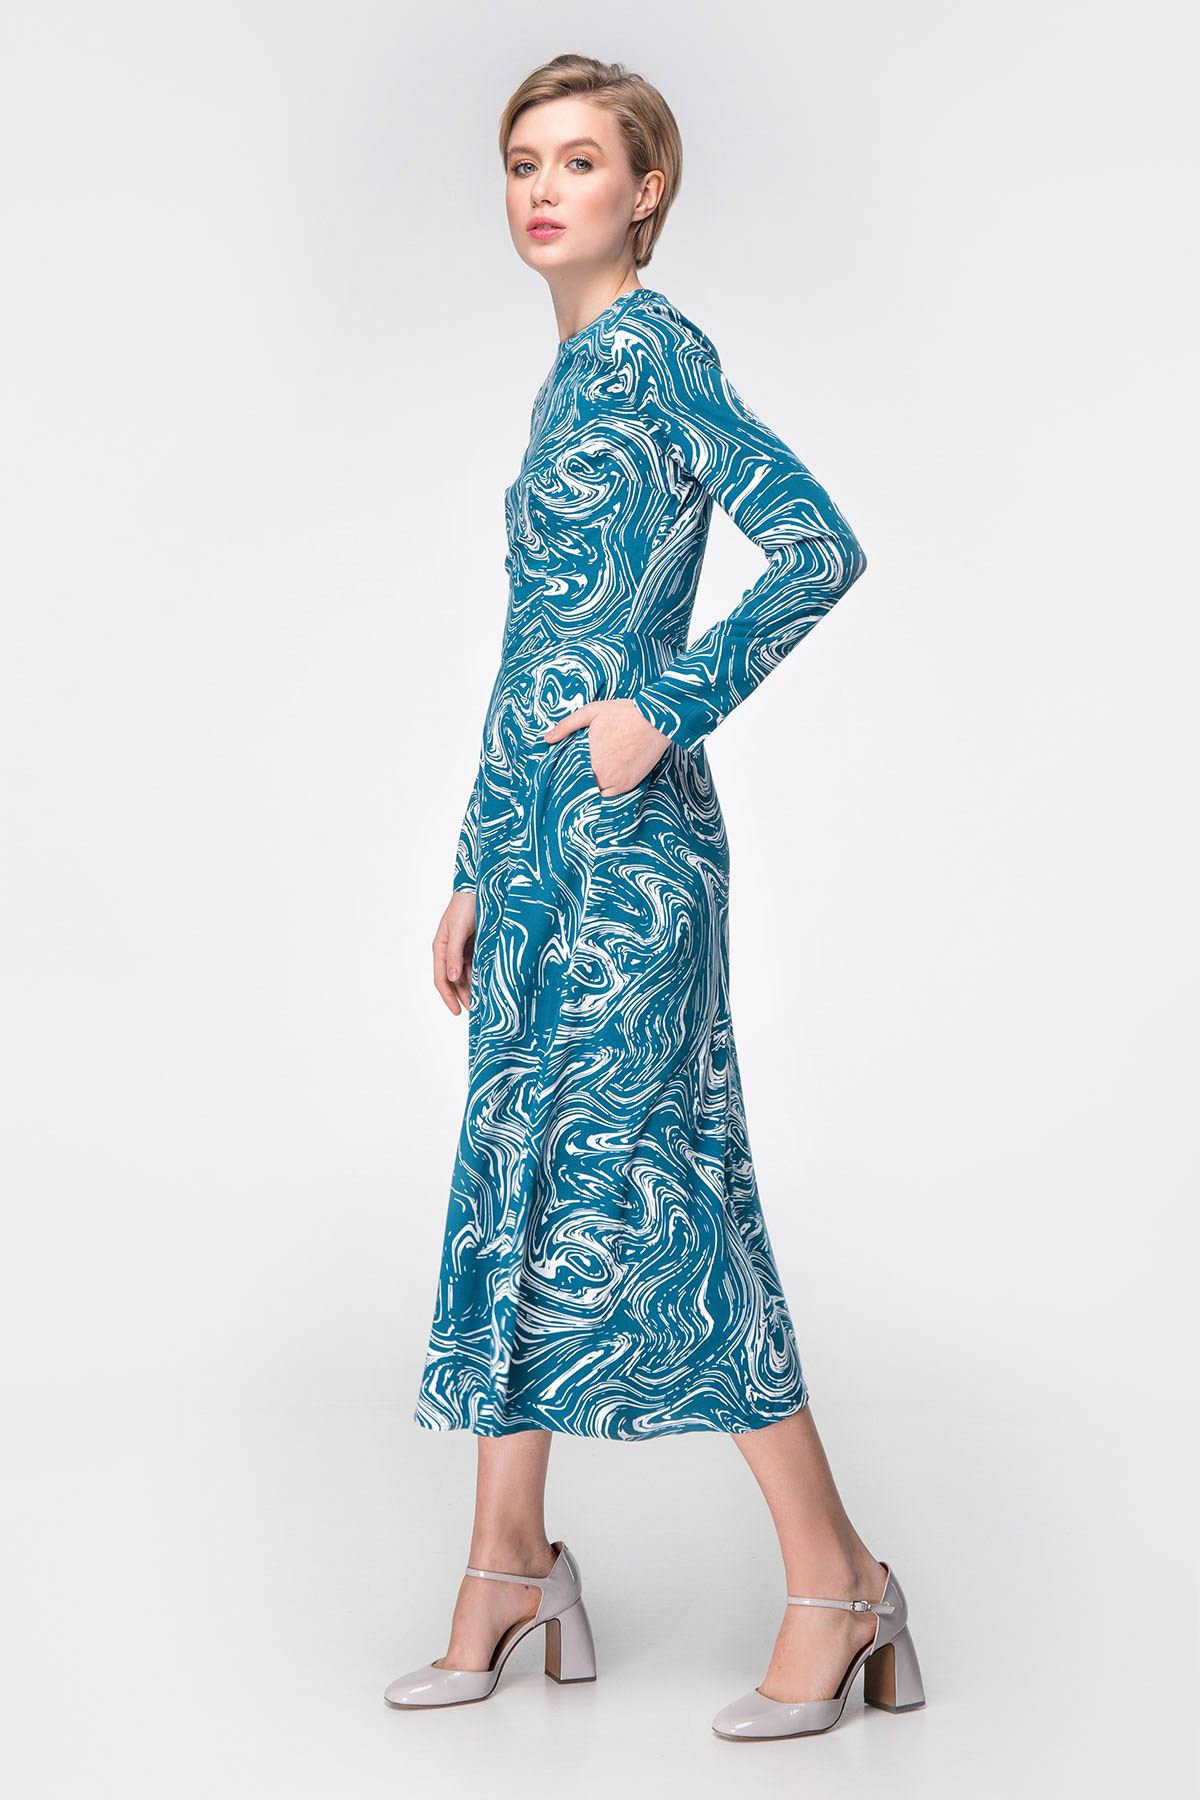 Midi dress with turquoise print, photo 4